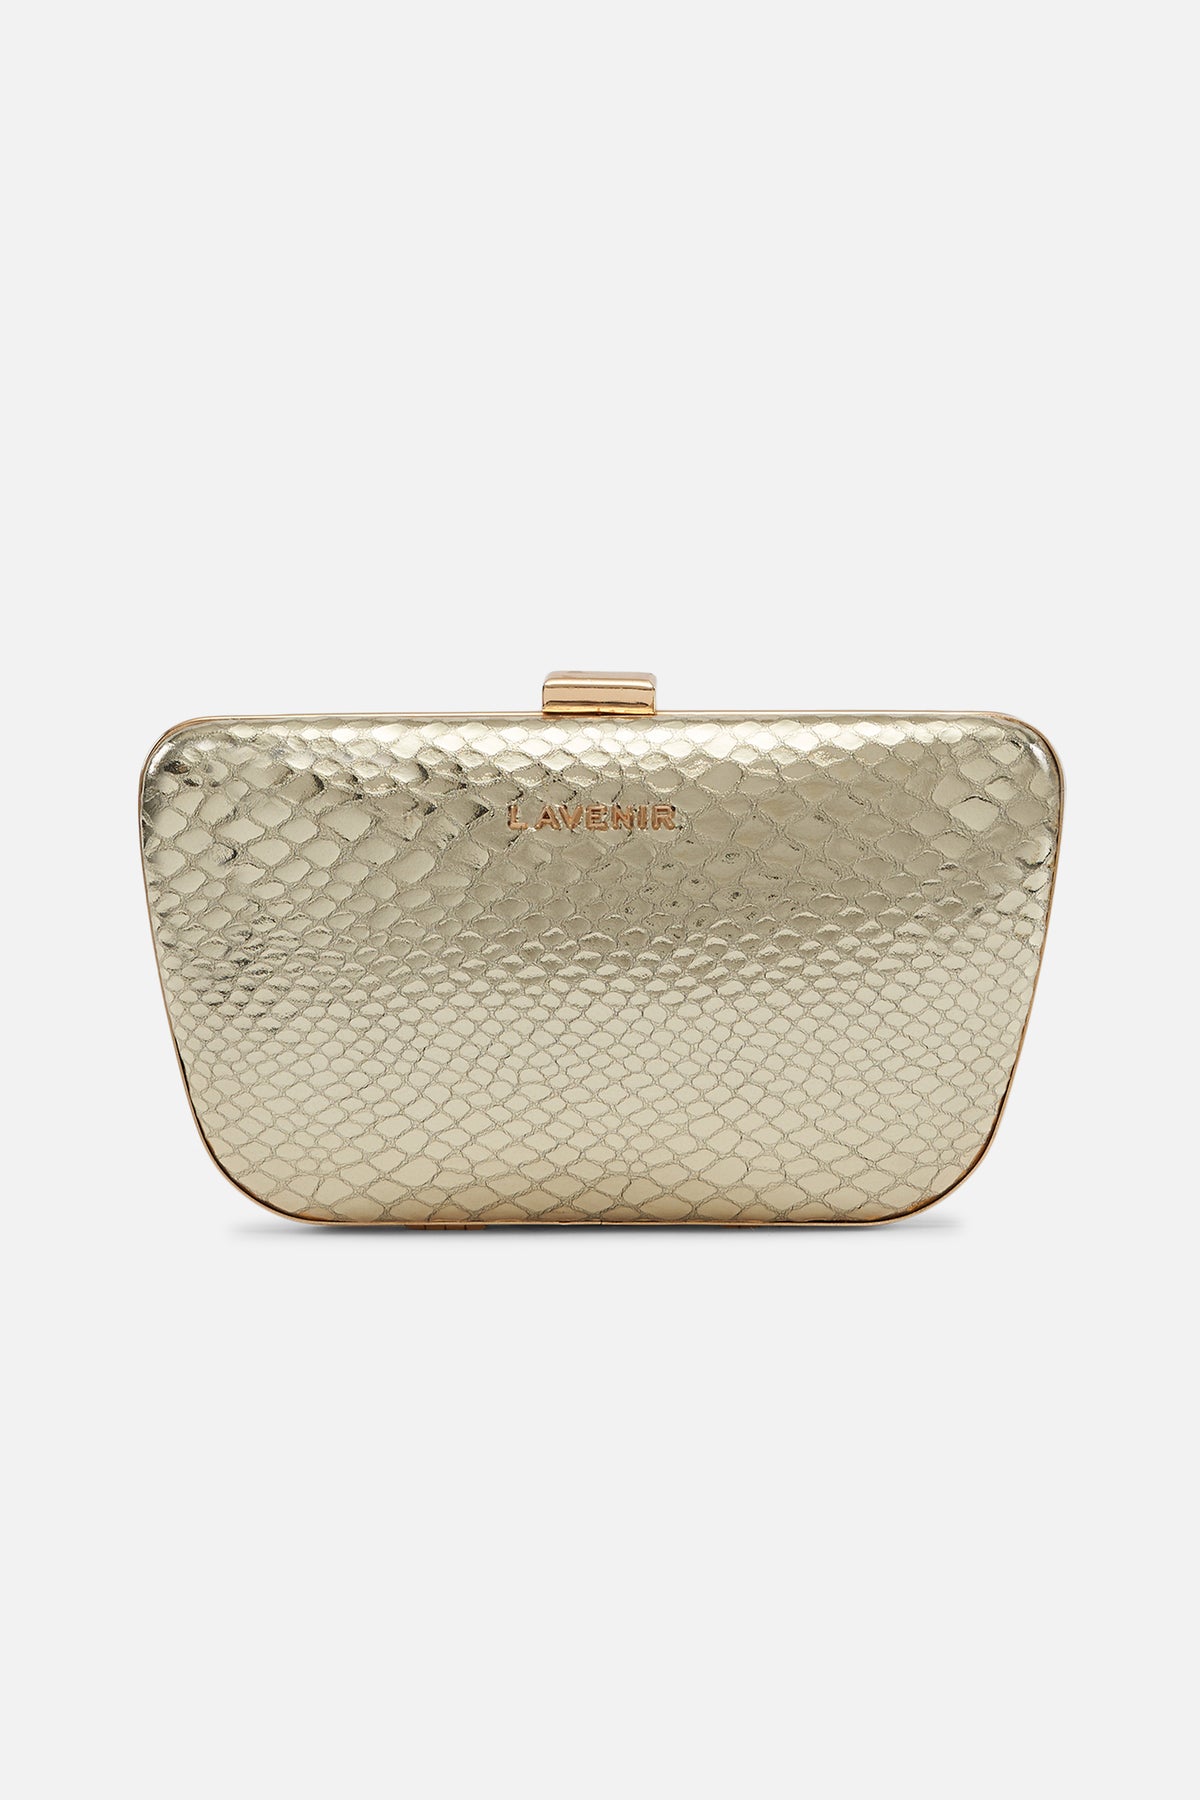 Camila - Leather Box Clutch Bag - Metallic Gold Python Print